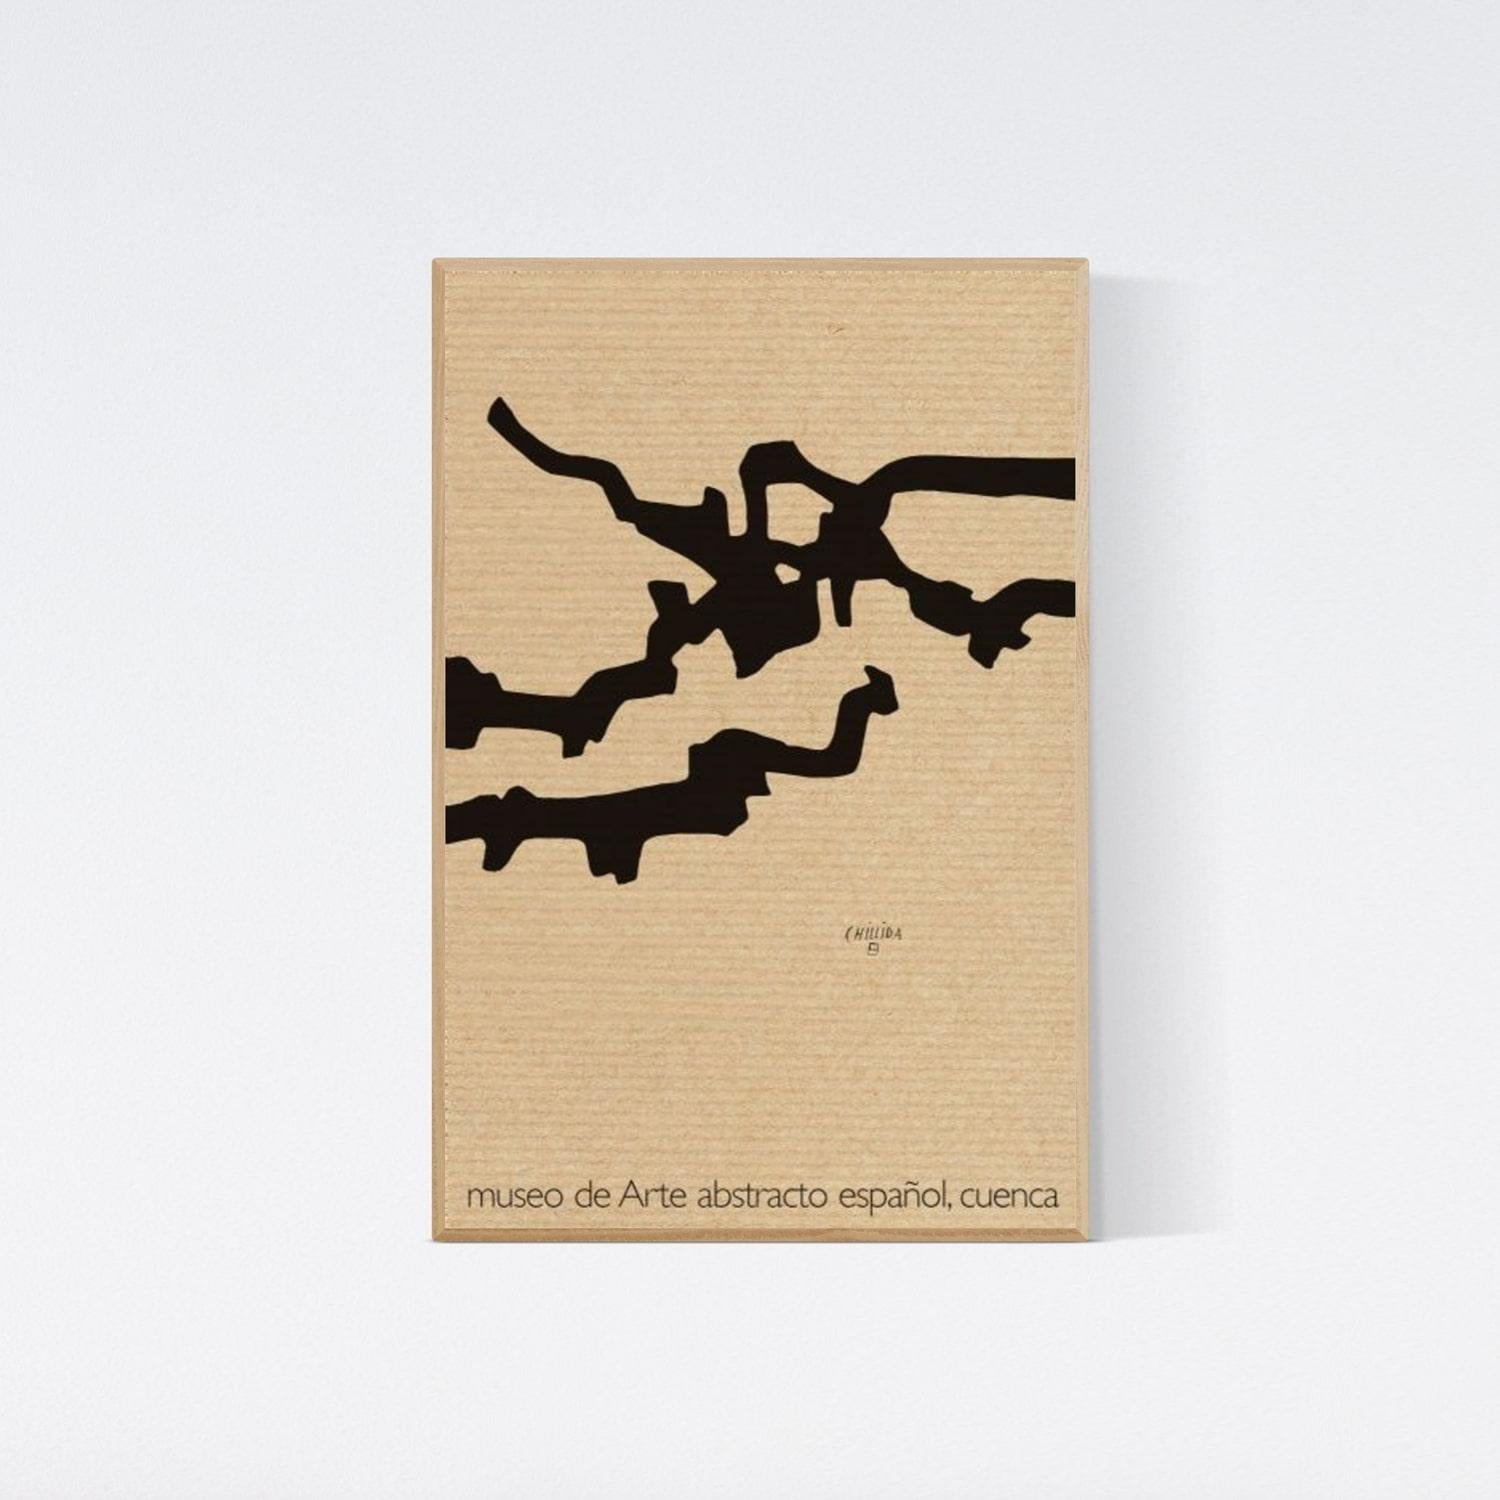 Lithography Exhibition Poster Vintage Black Minimal Geometric - Abstract Geometric Print by Eduardo Chillida